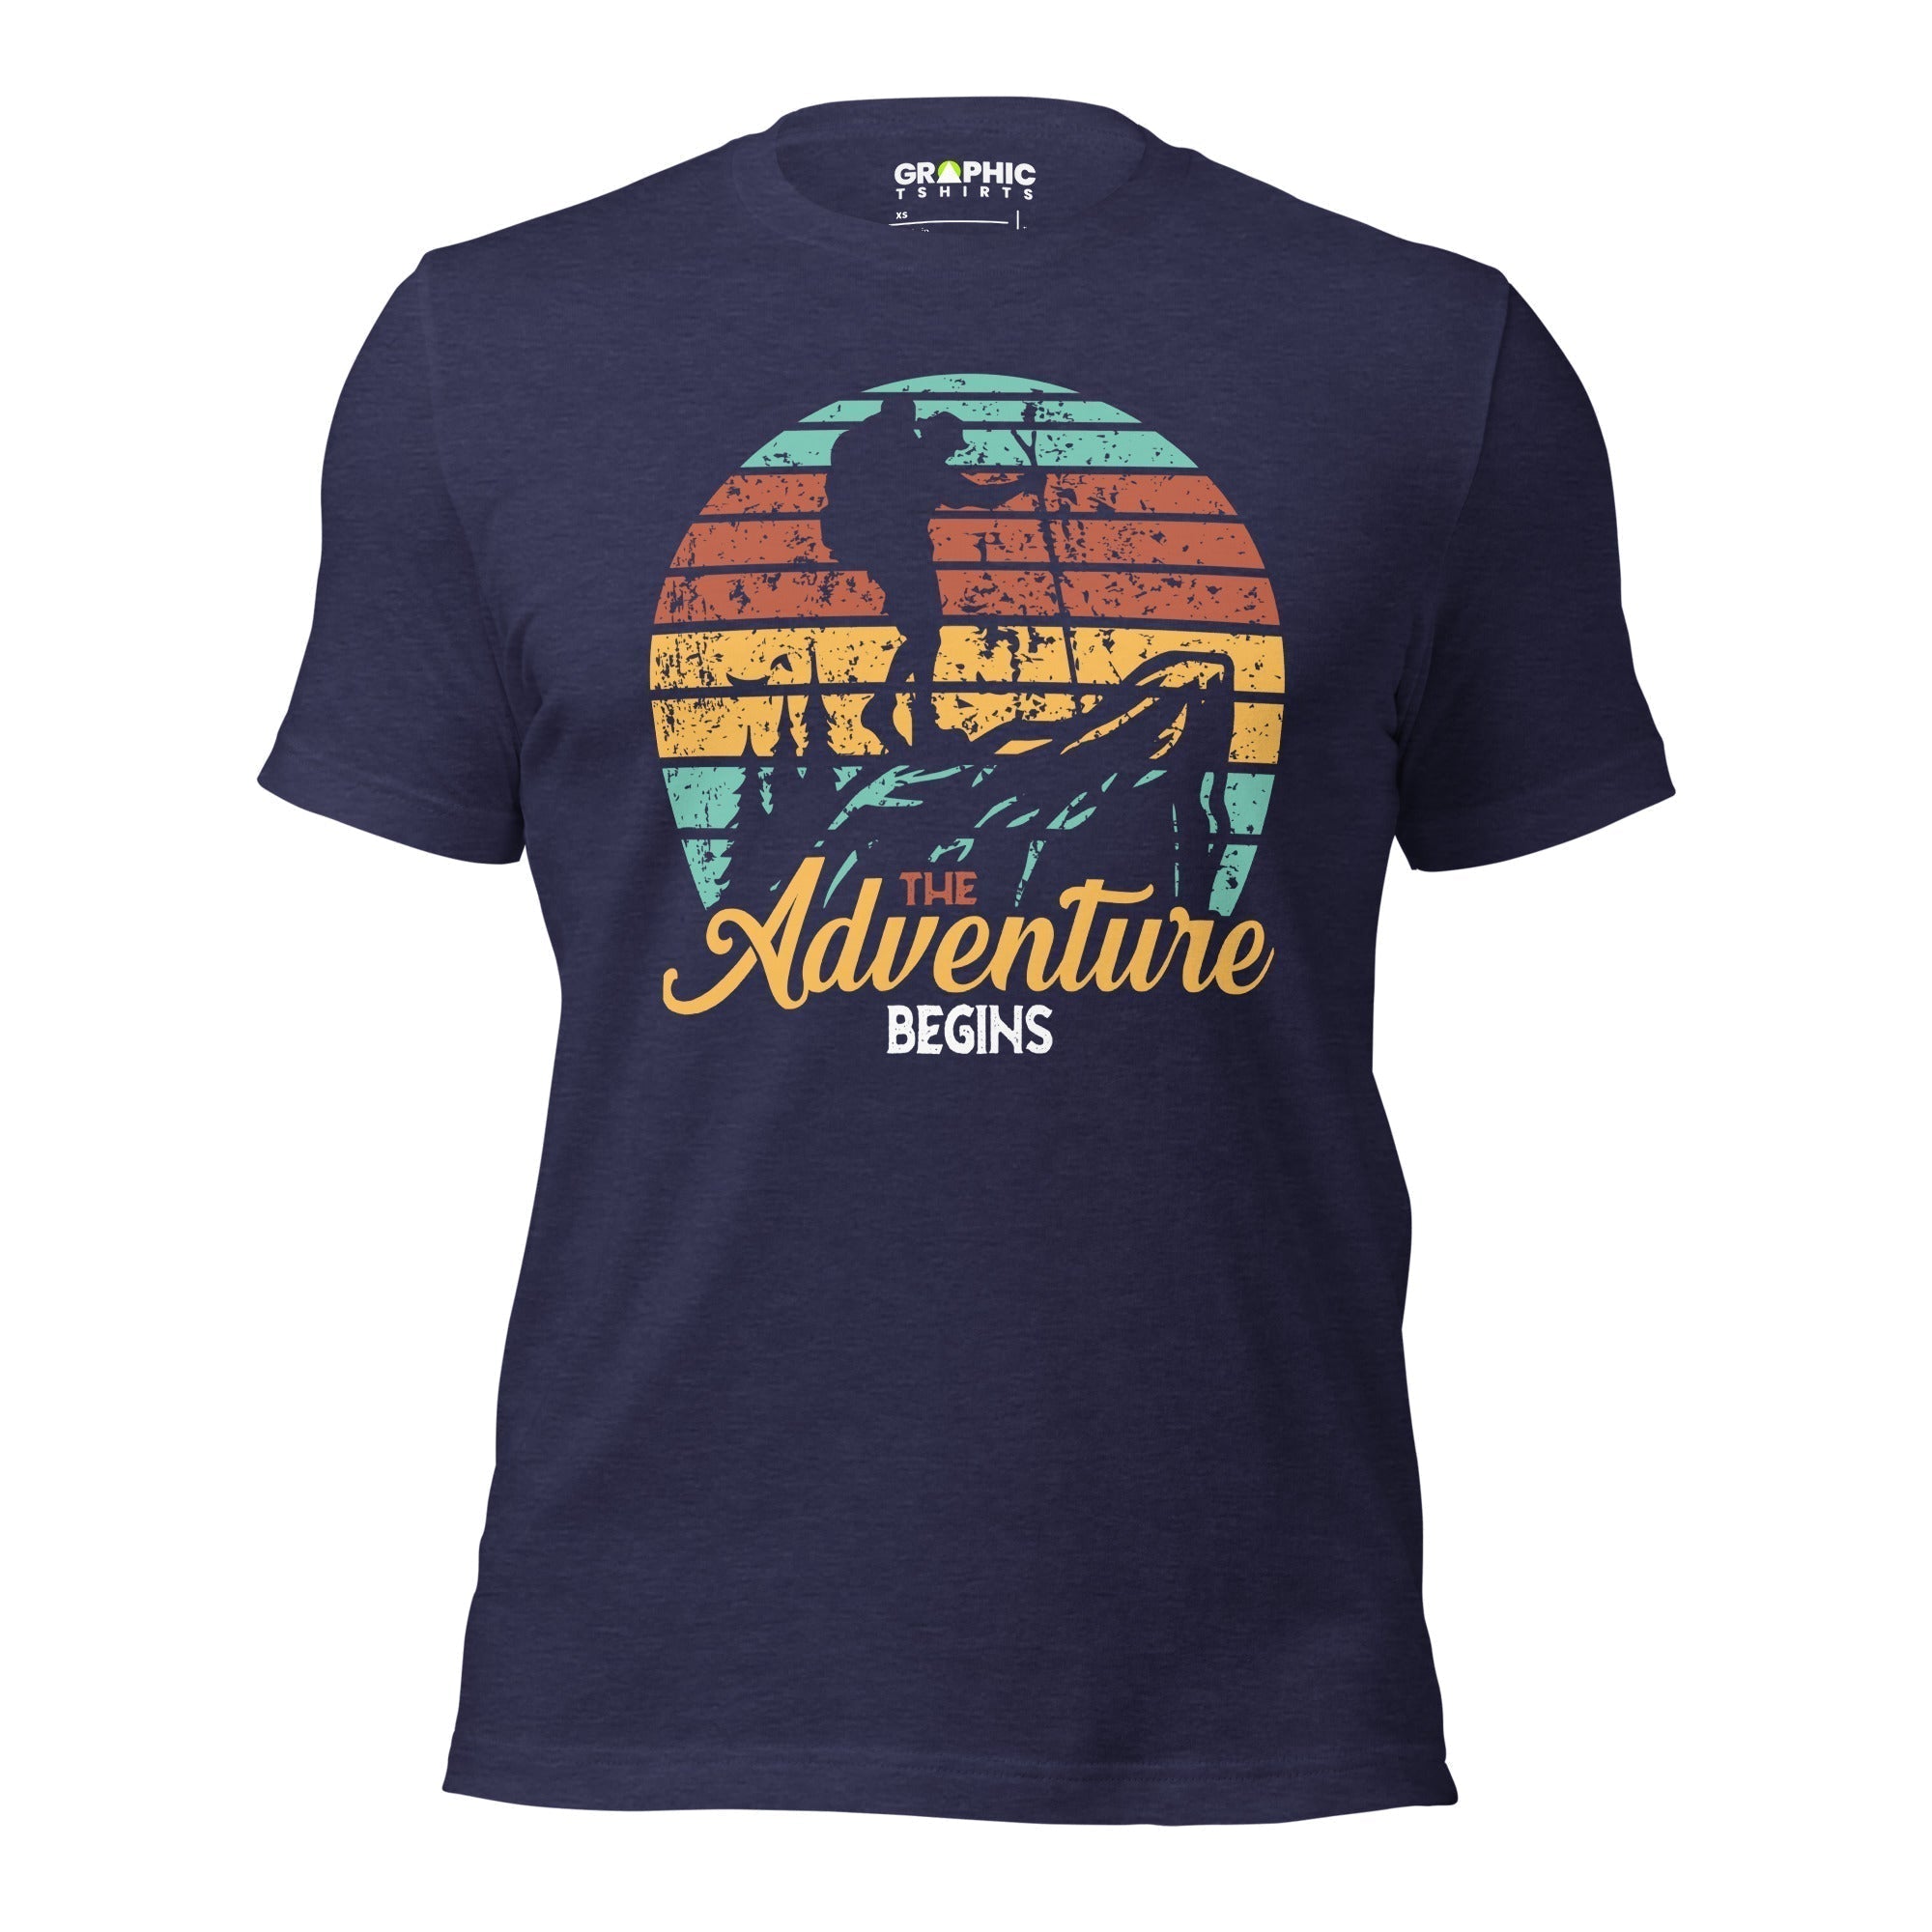 Unisex Staple T-Shirt - The Adventure Begins - GRAPHIC T-SHIRTS